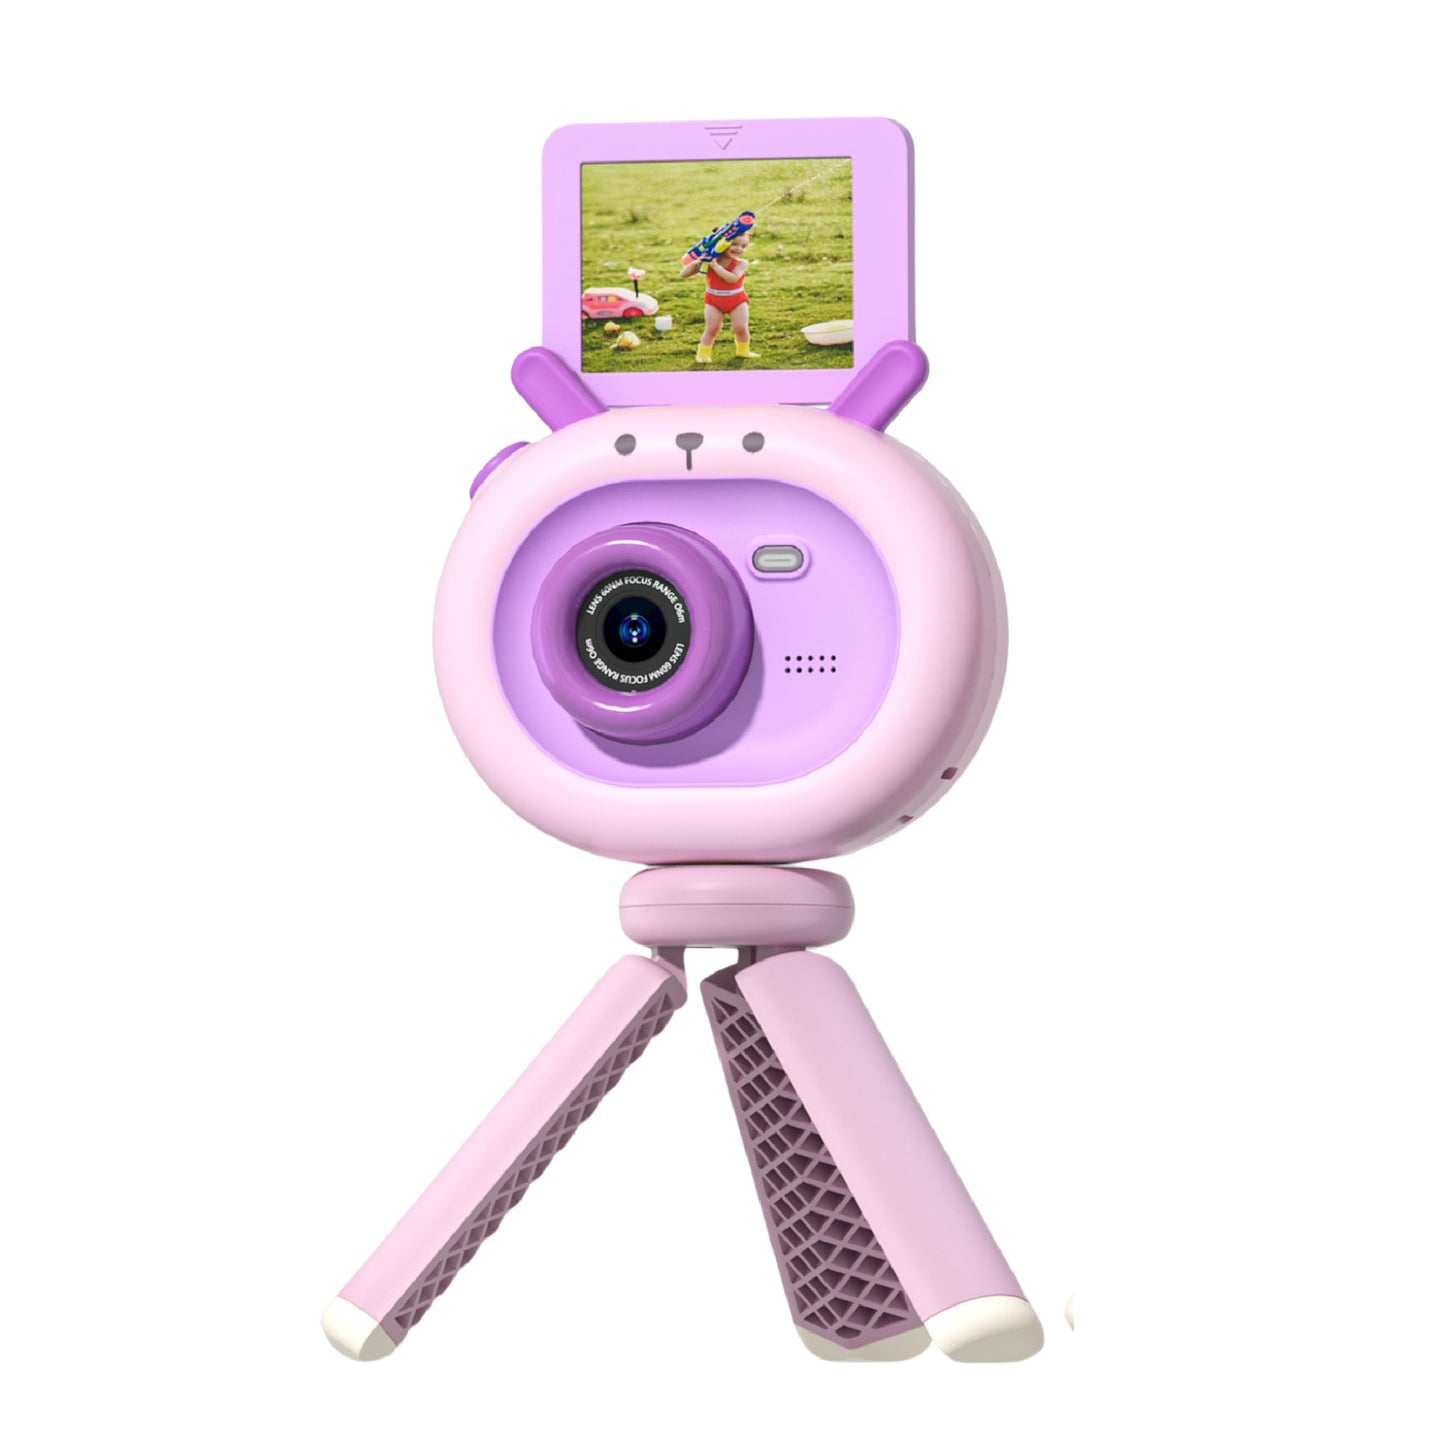 Berpy キッズカメラ 子供用 おもちゃ トイカメラ 動画撮影 カメラ ベビー 手持ち 三脚 取り外し可能 HD 32GB microSDカード付属 男の子 女の子 知育玩具 誕生日 プレゼント